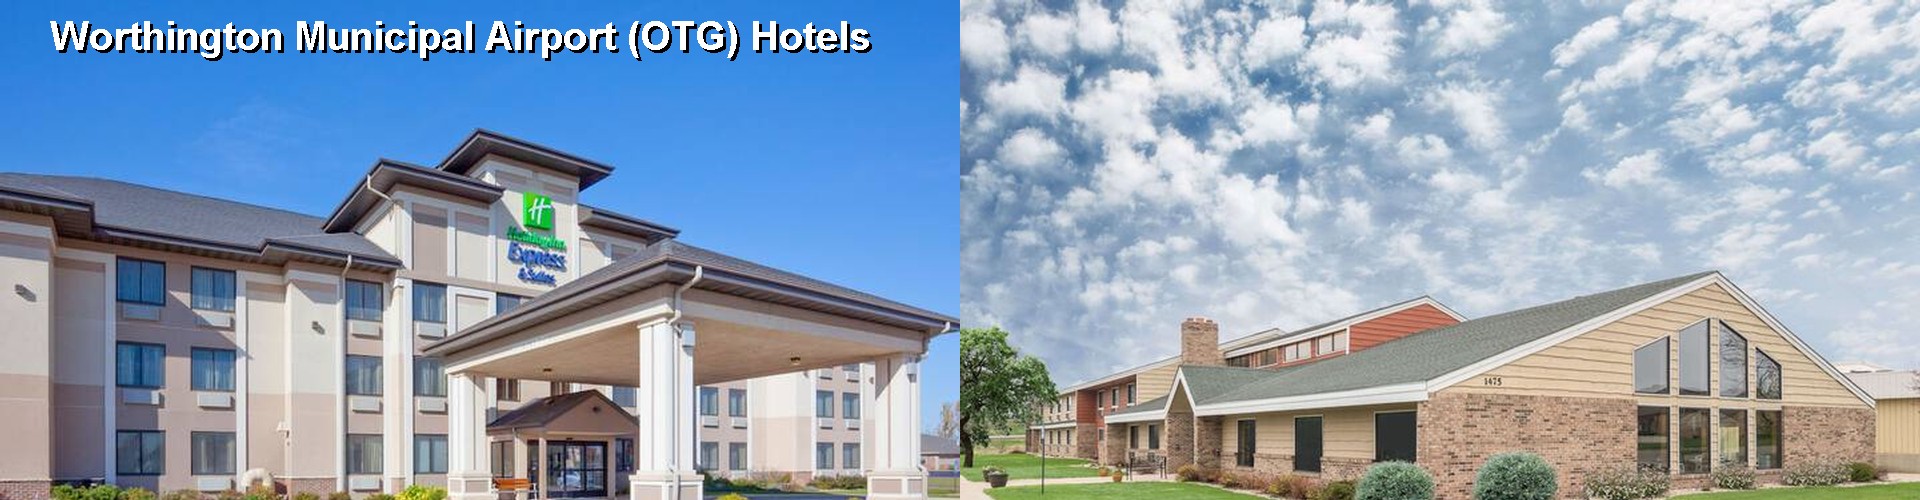 5 Best Hotels near Worthington Municipal Airport (OTG)